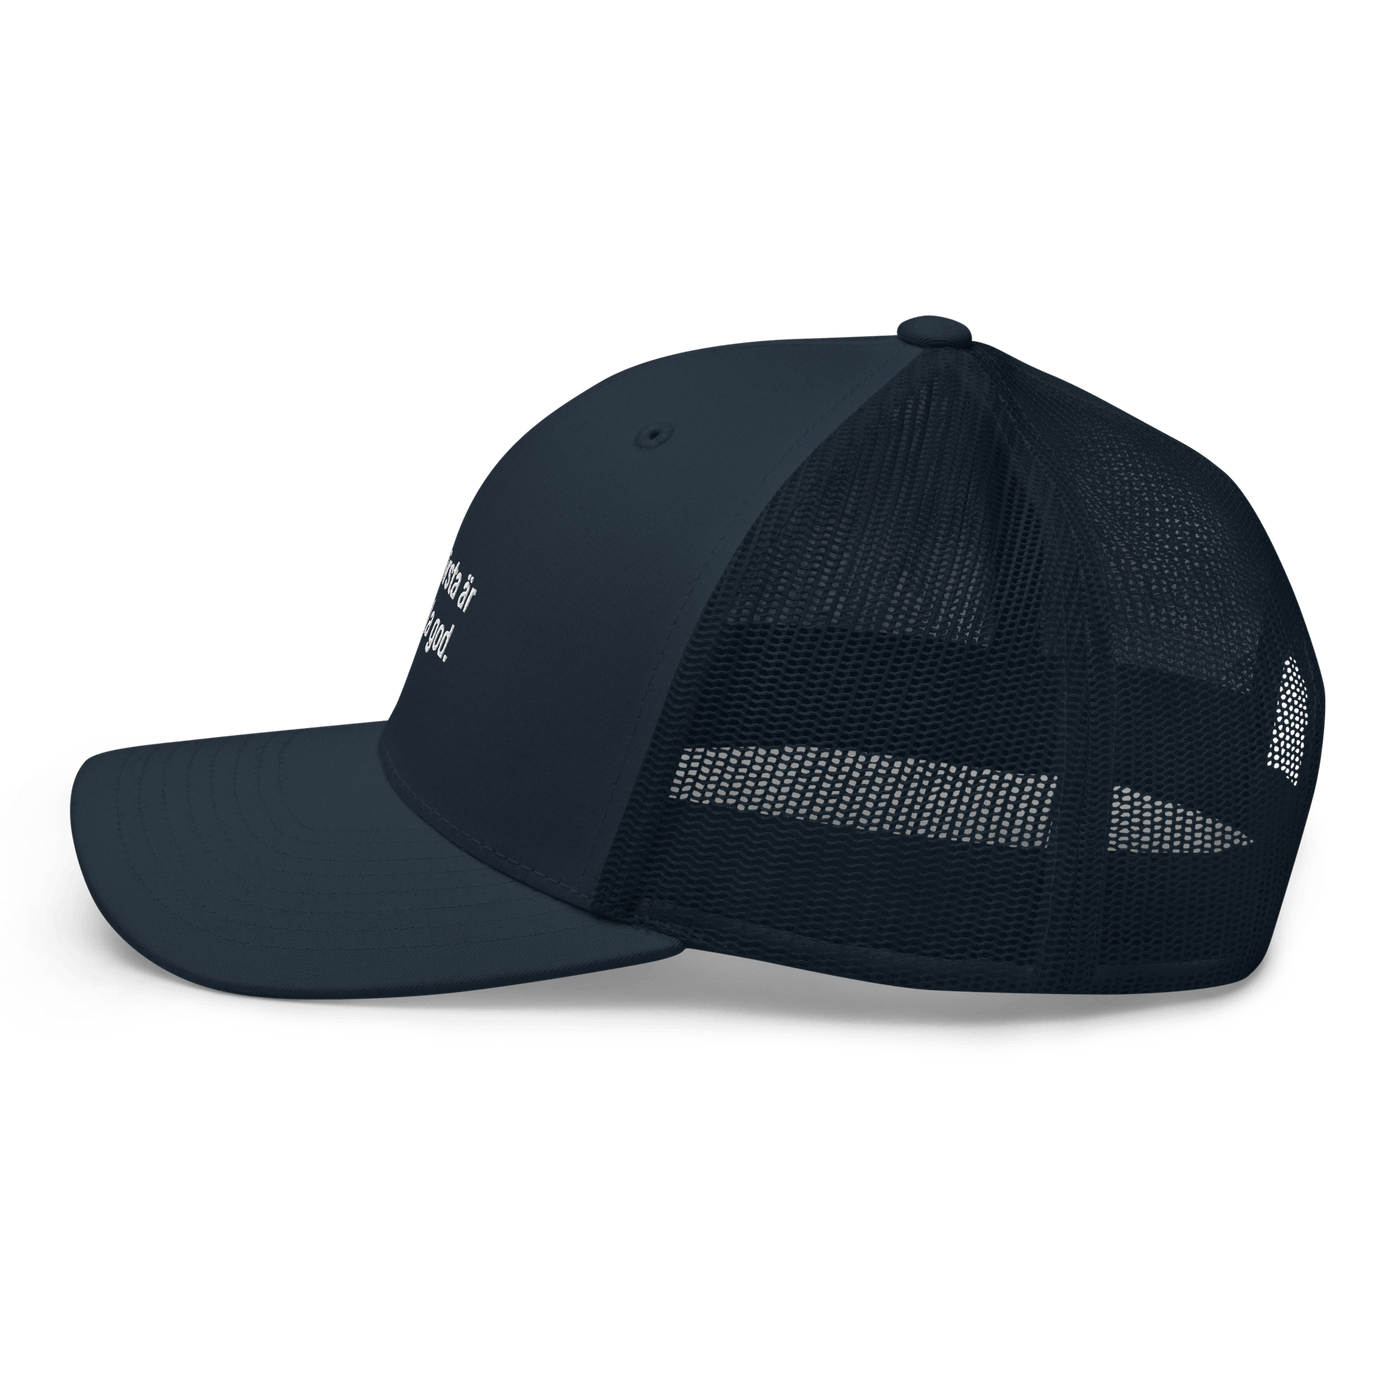 Den första Trucker Cap - Black - - Just Another Cap Store